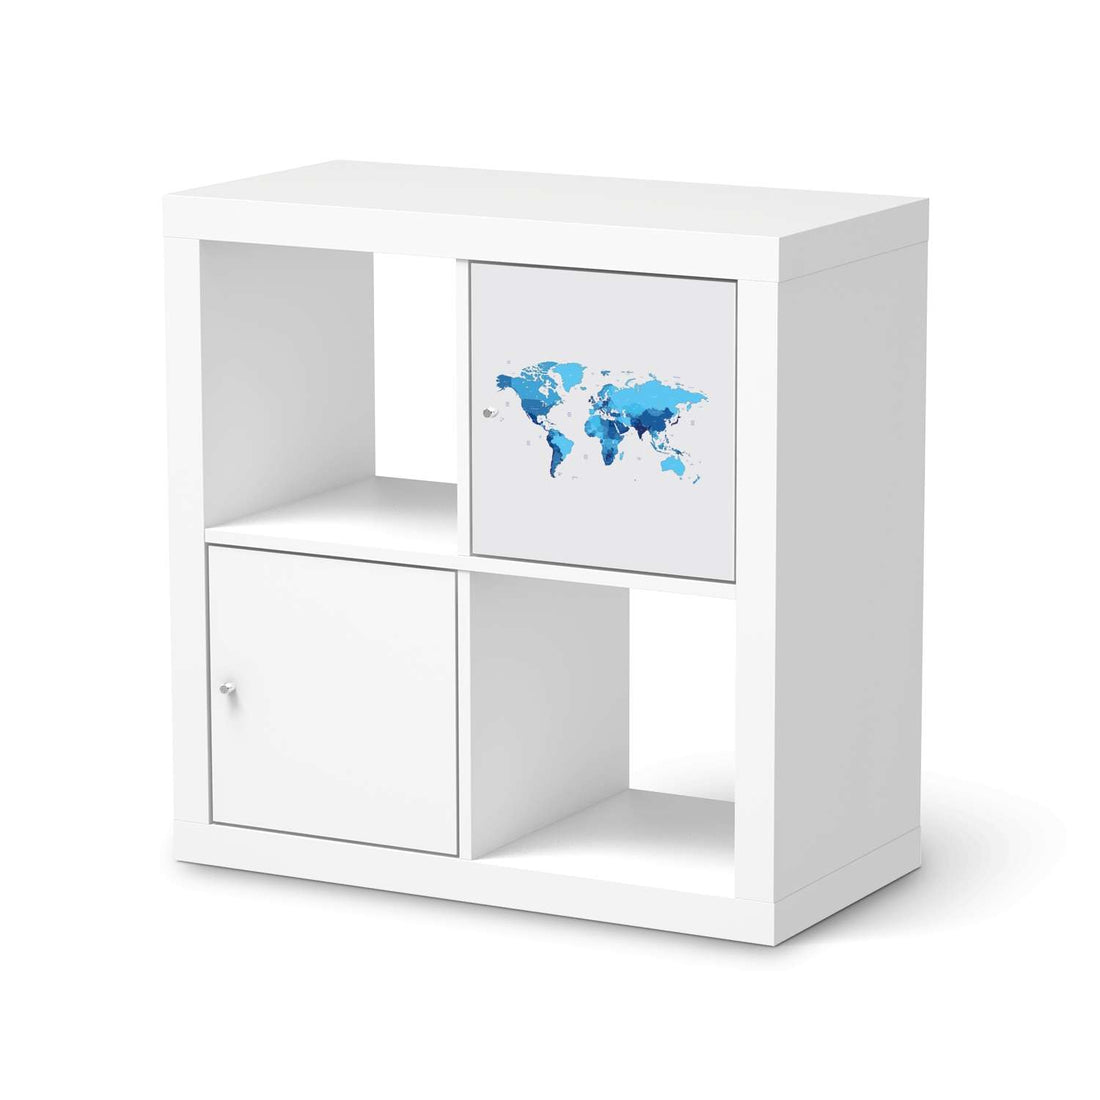 Selbstklebende Folie Politische Weltkarte - IKEA Kallax Regal 1 Türe  - weiss